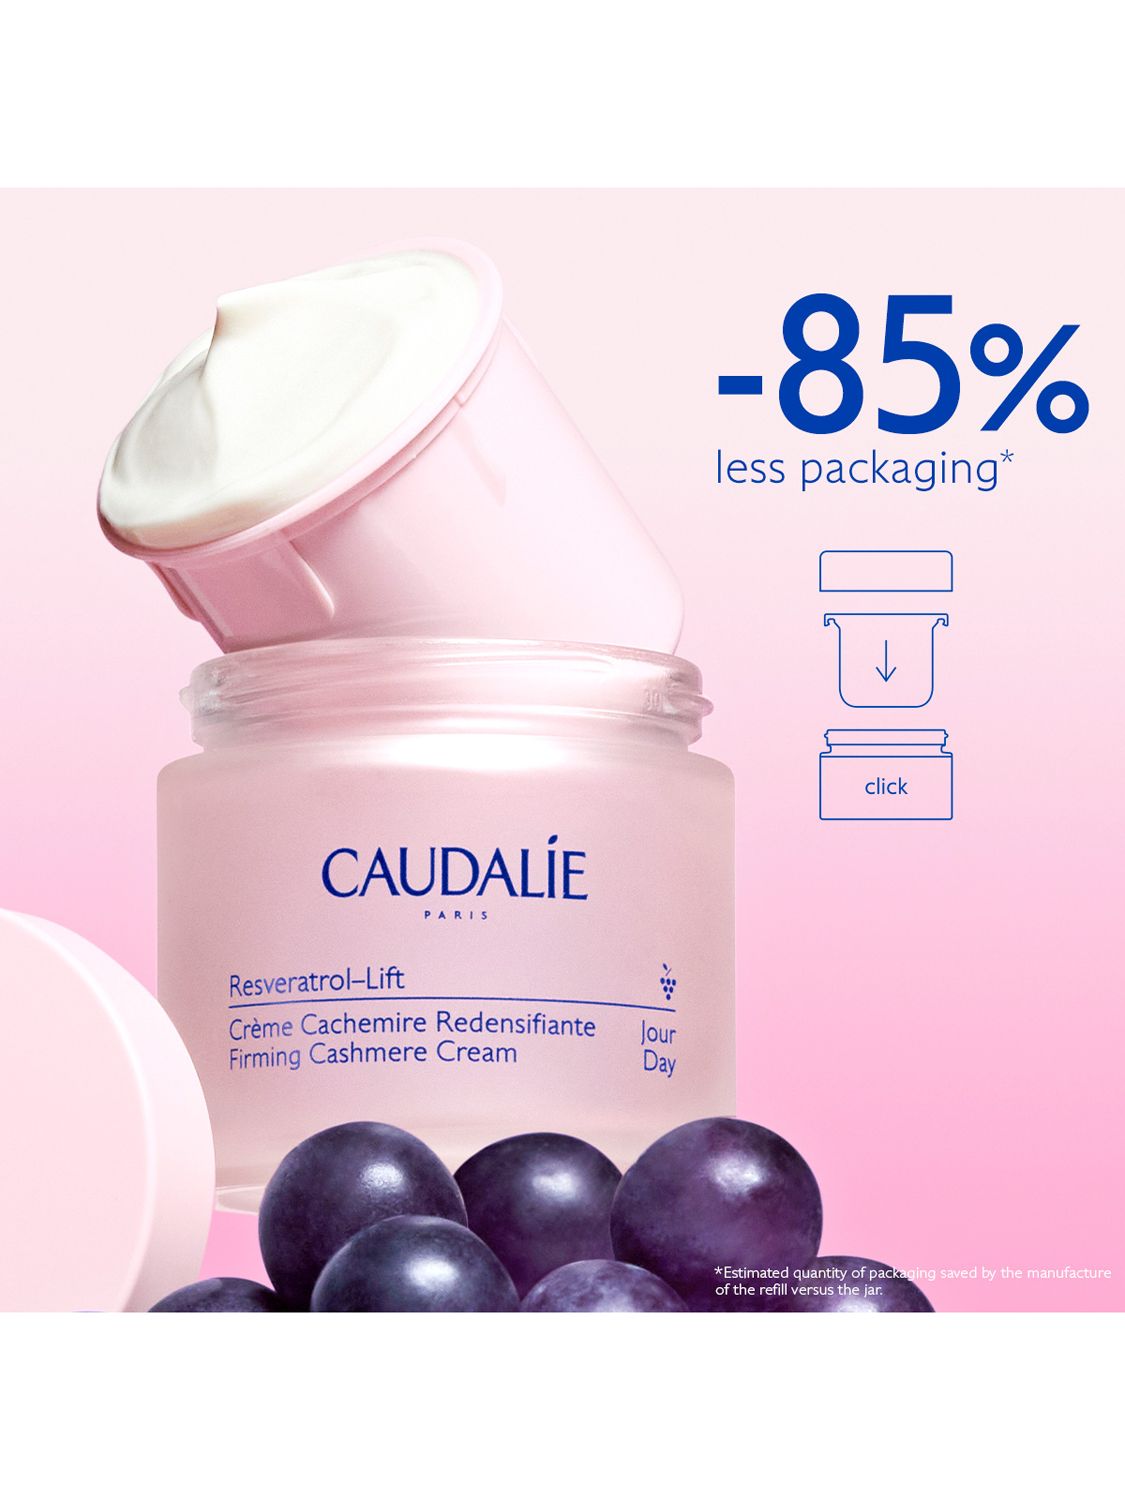 Caudalie Resveratrol-Lift Firming Cashmere Cream Refill, 50ml 8